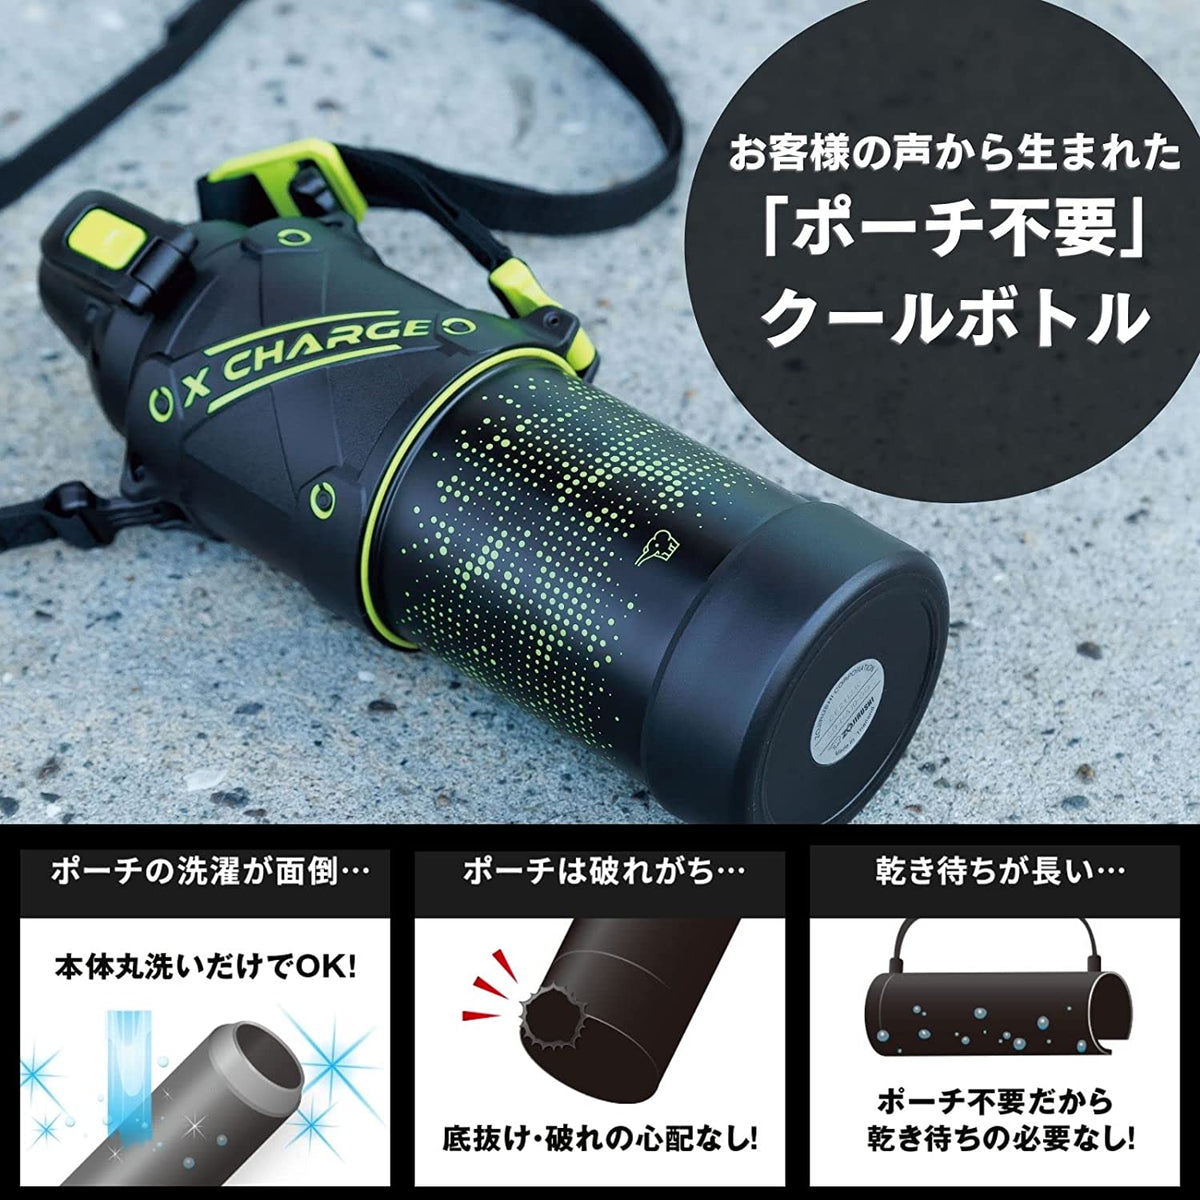 Zojirushi Water Bottle Screw Stainless Steel Mug Seamless Direct Drink  SM-ZB36 360ml